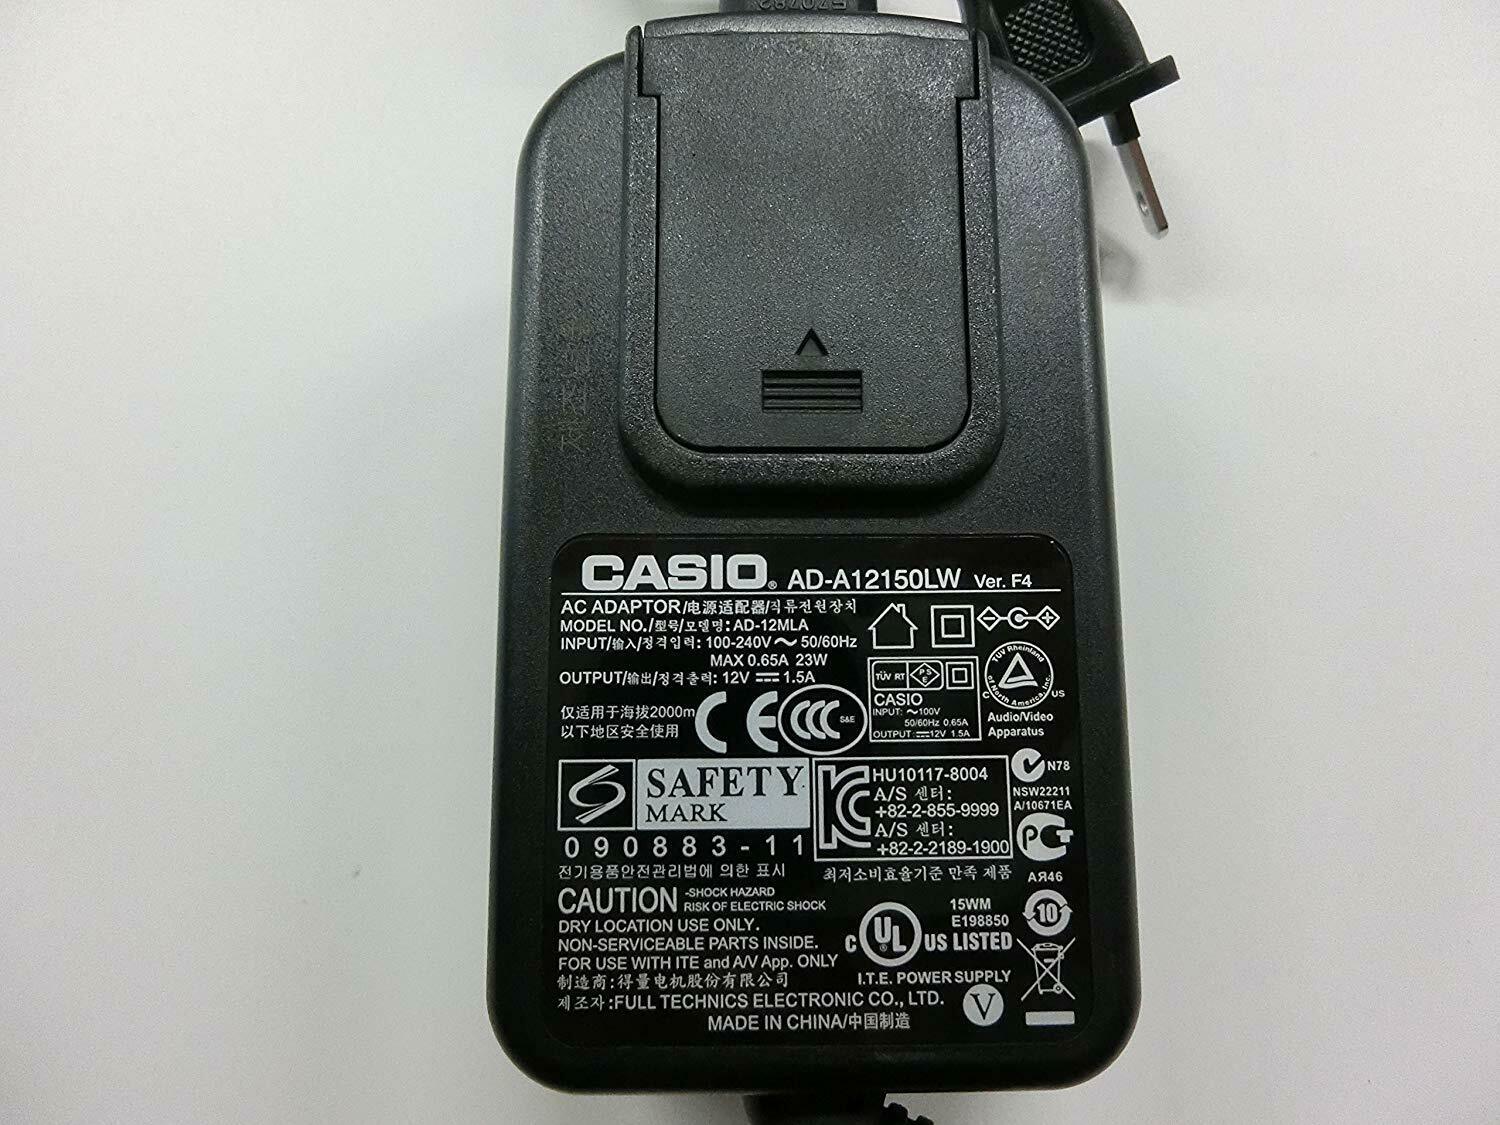 NEW 12V 1.5A Casio AD-A12150LW AD-12MLA AC Adapter